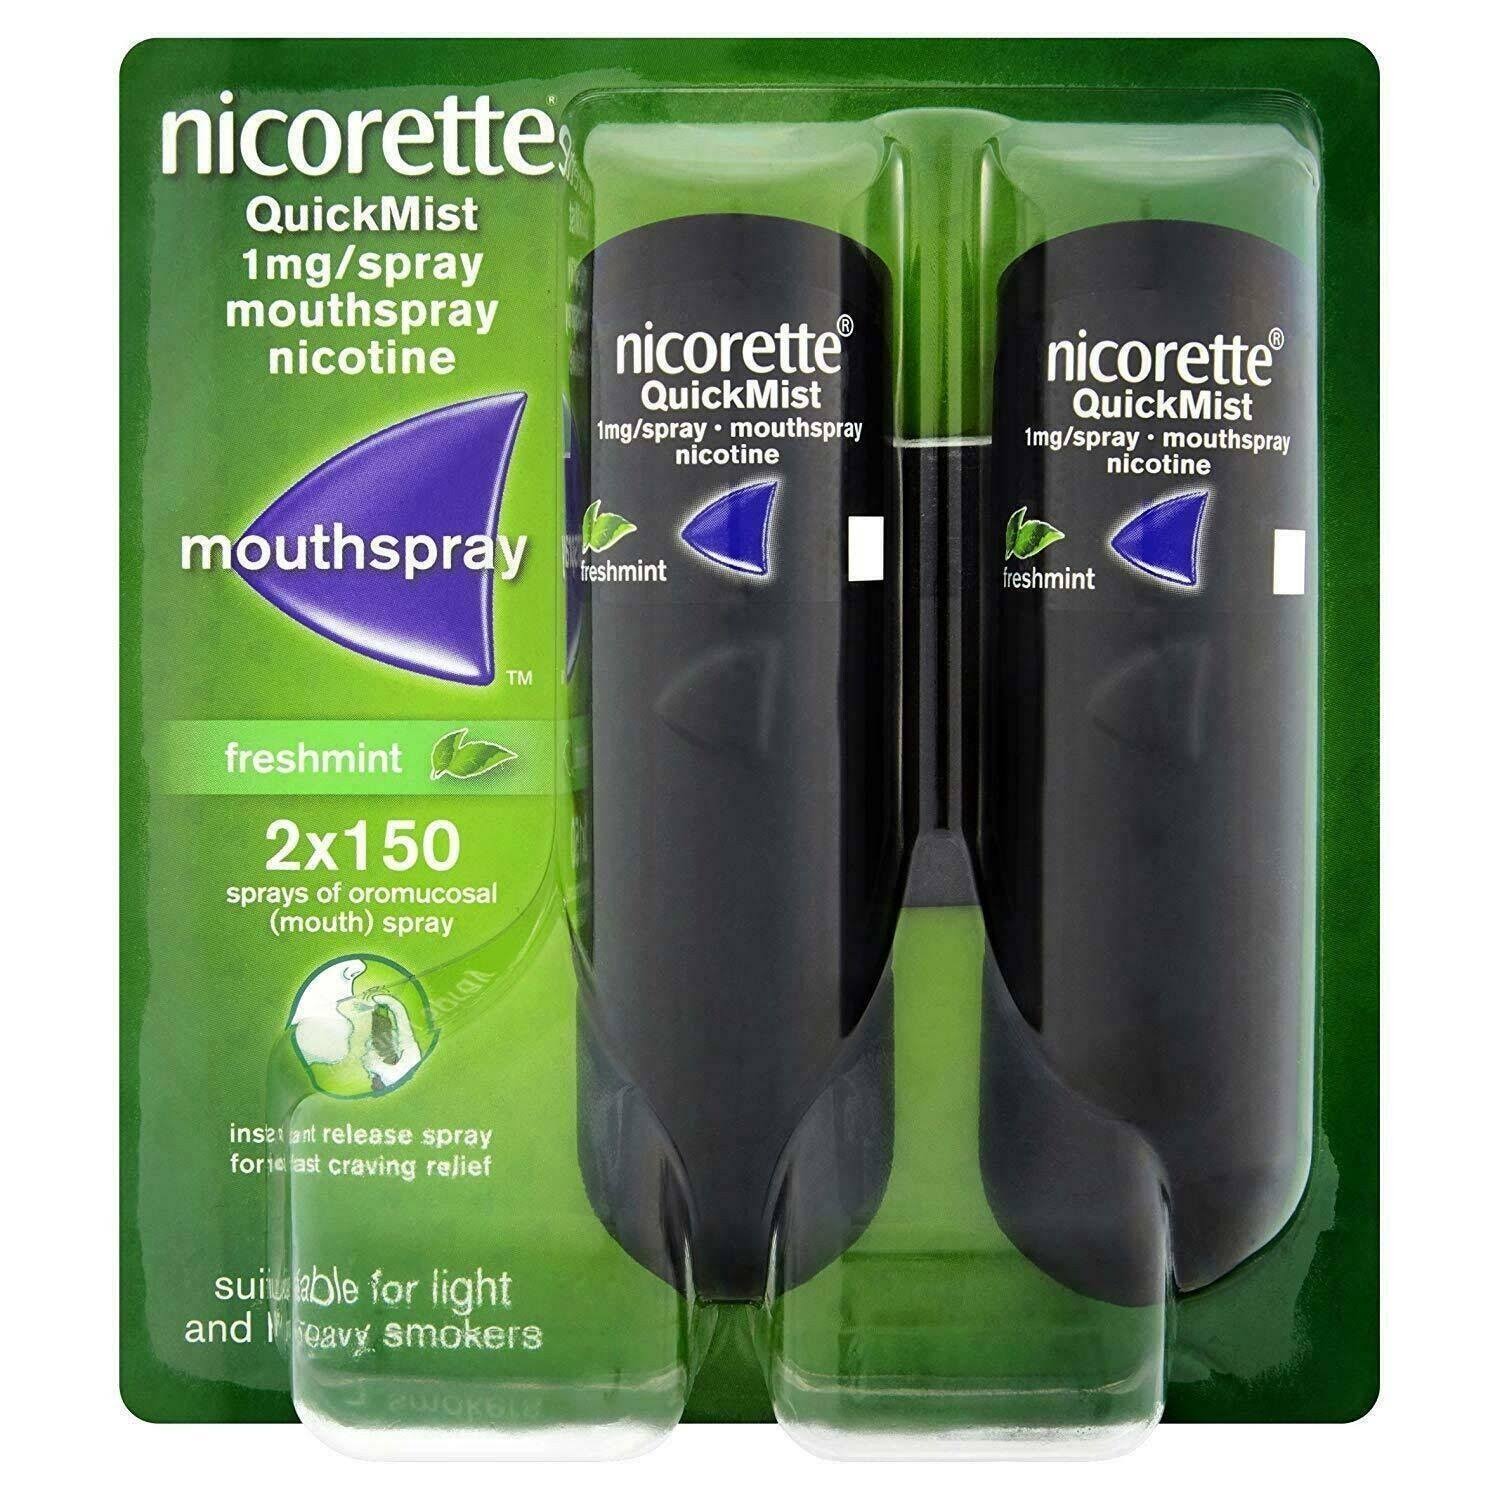 Nicorette Quickmist Duo 2x150 Sprays (nicotine 1mg / Mouthspray) Black